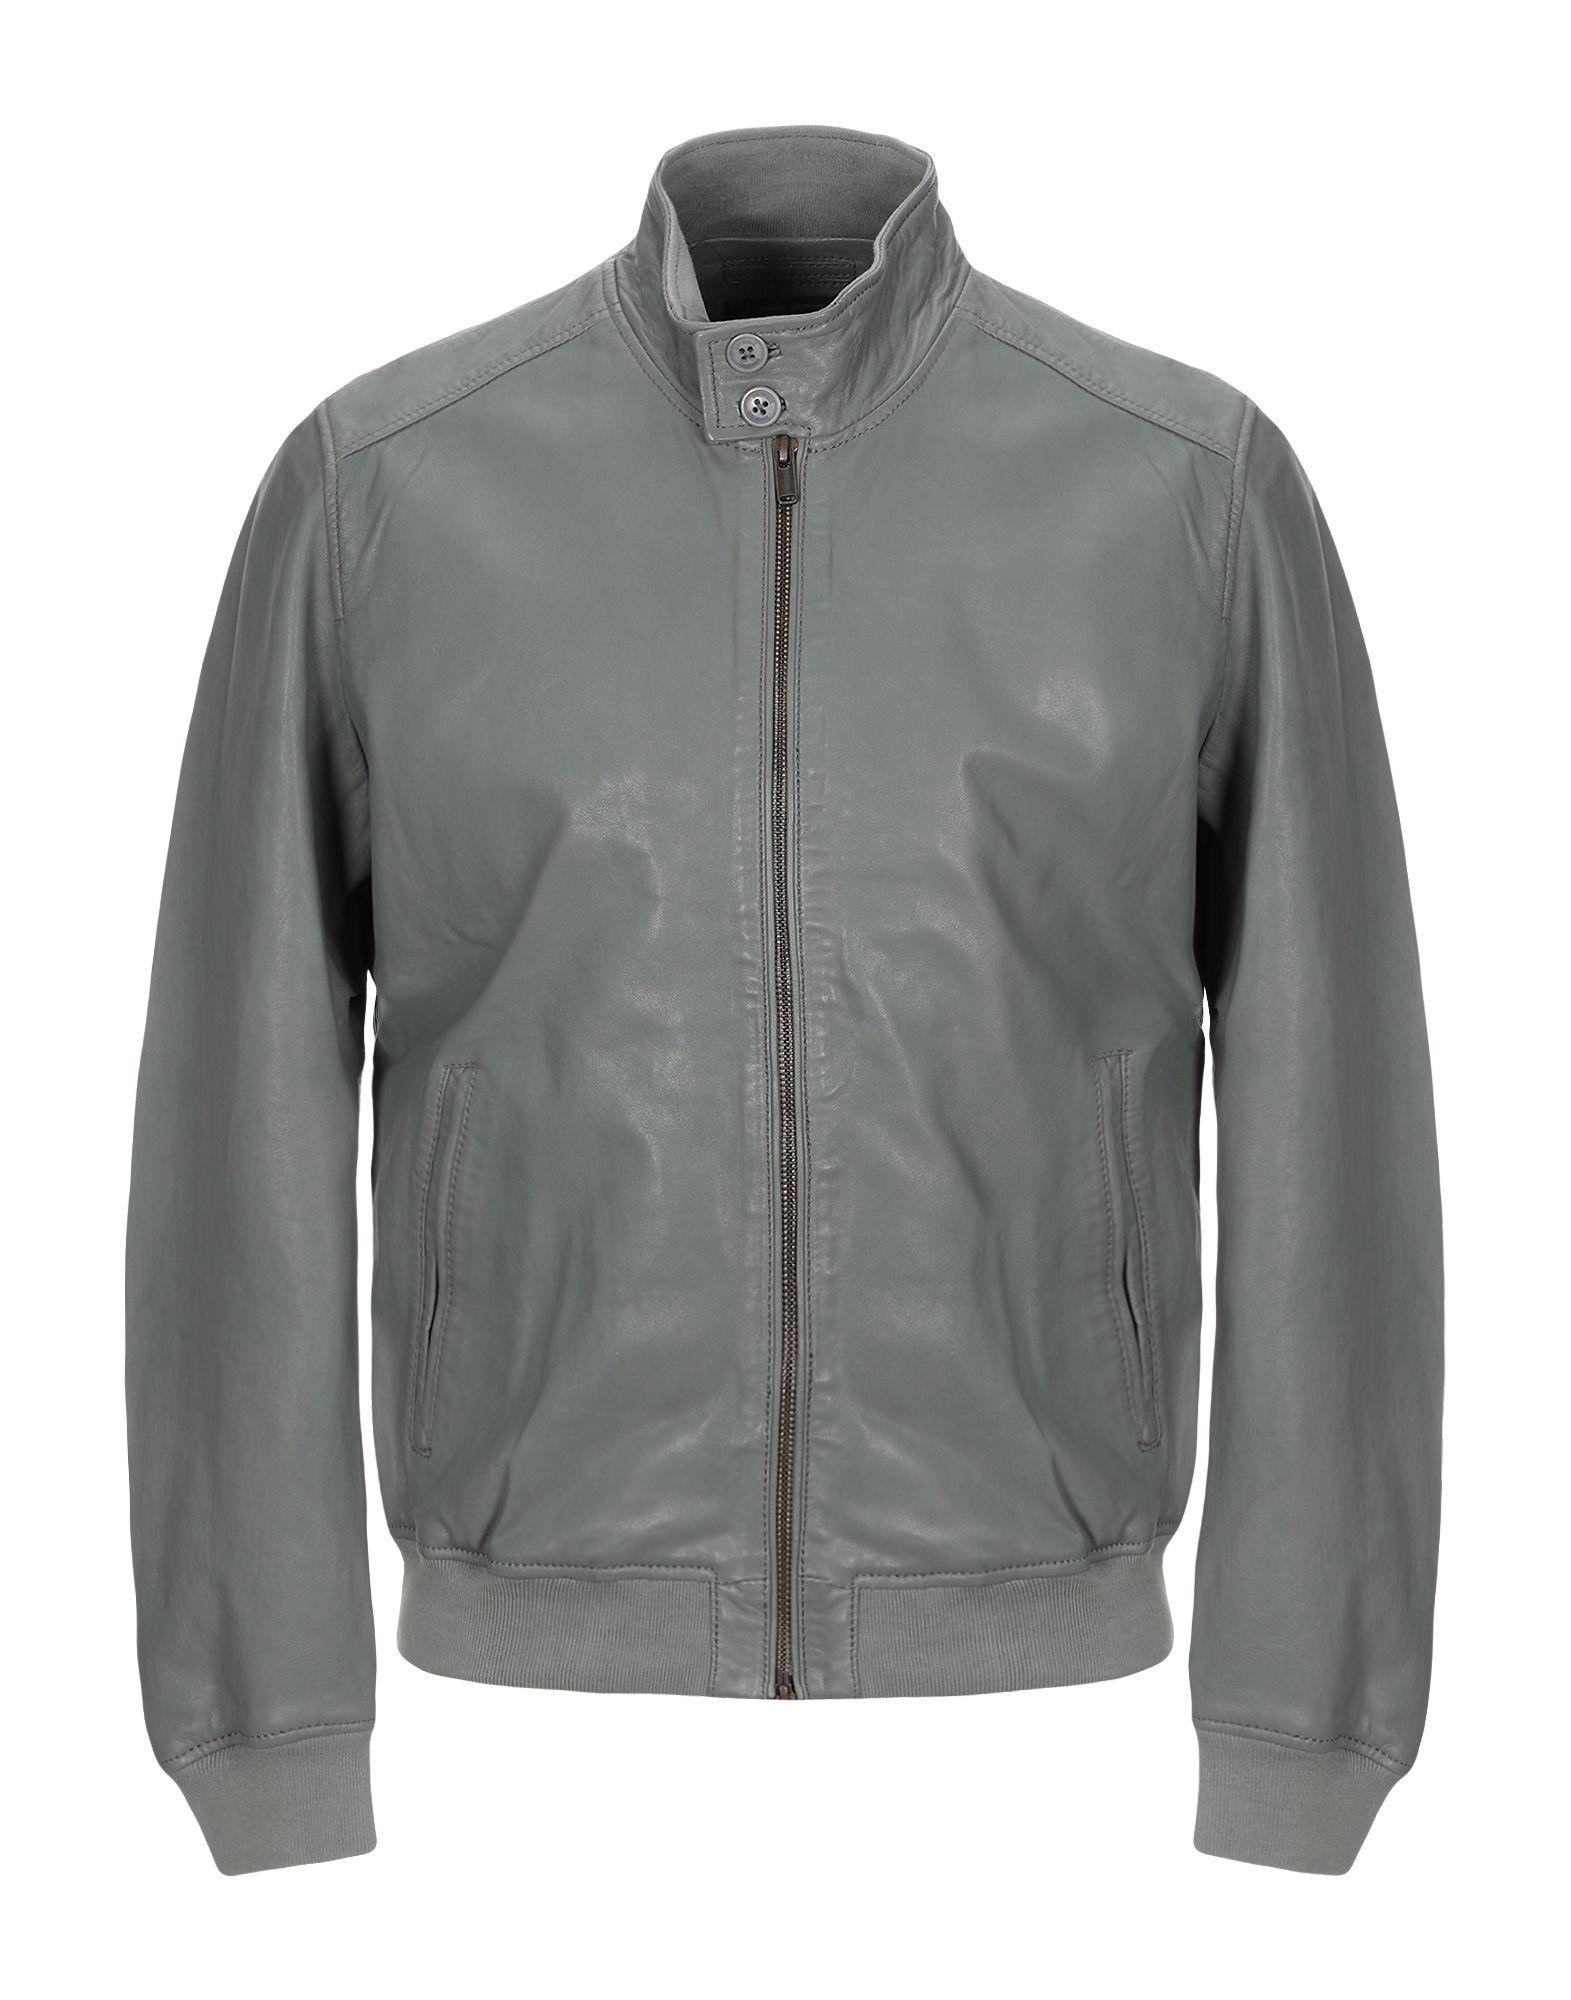 Bomboogie Leather Jacket in Lead (Gray) for Men - Lyst